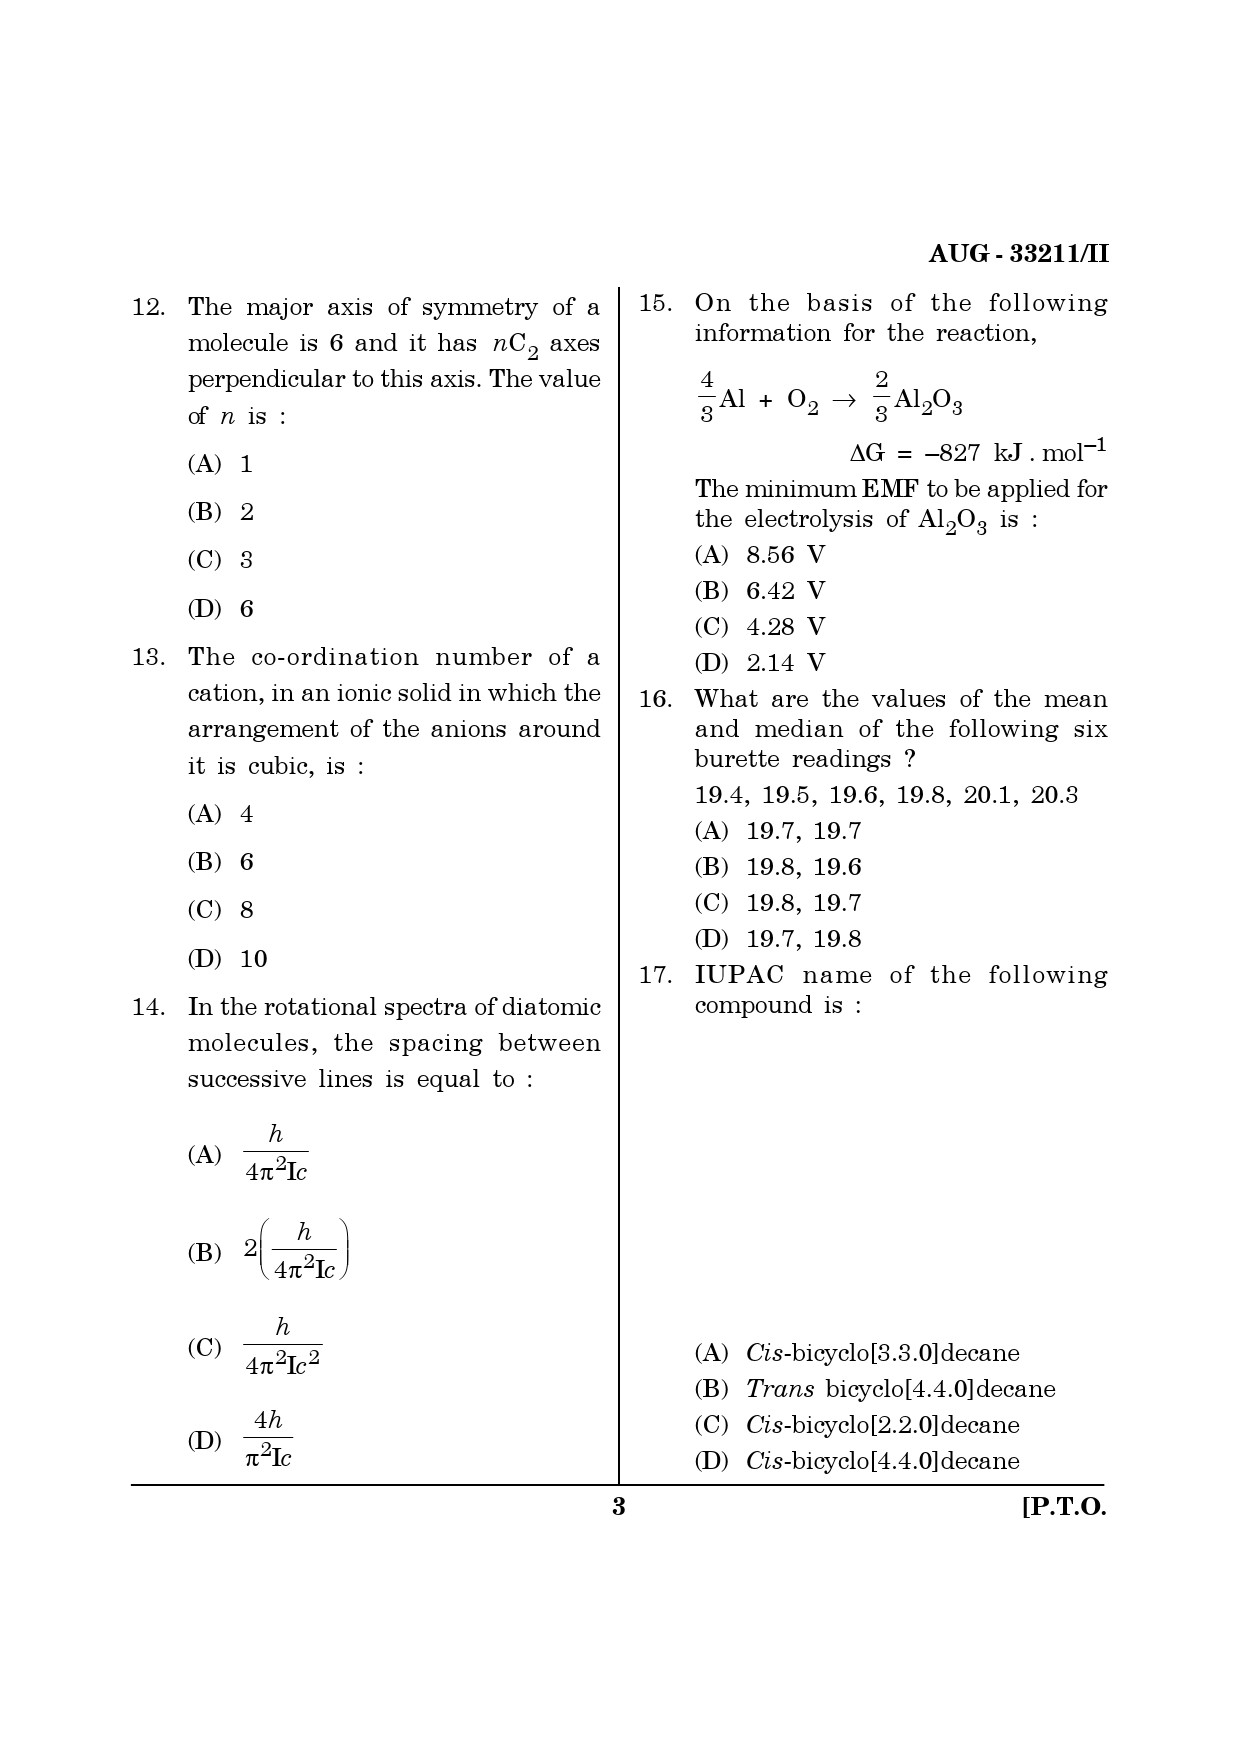 Maharashtra SET Chemical Sciences Question Paper II August 2011 3